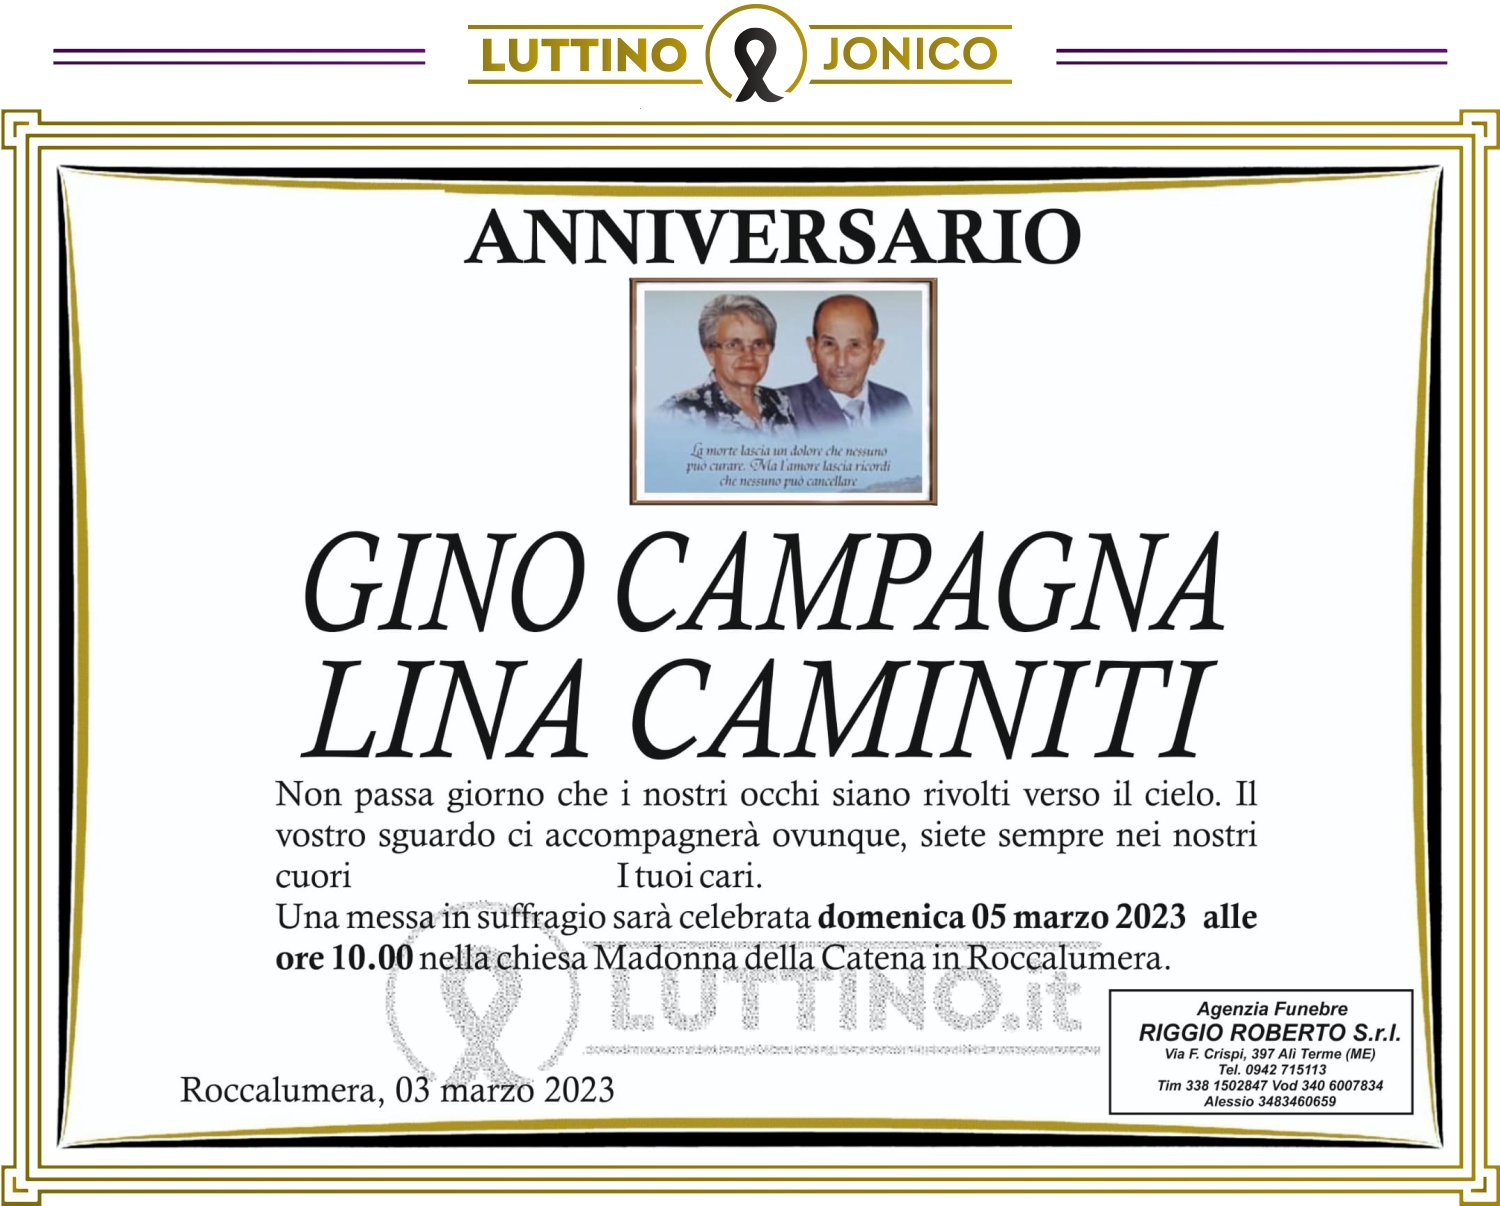 Lina Caminiti e Gino Campagna